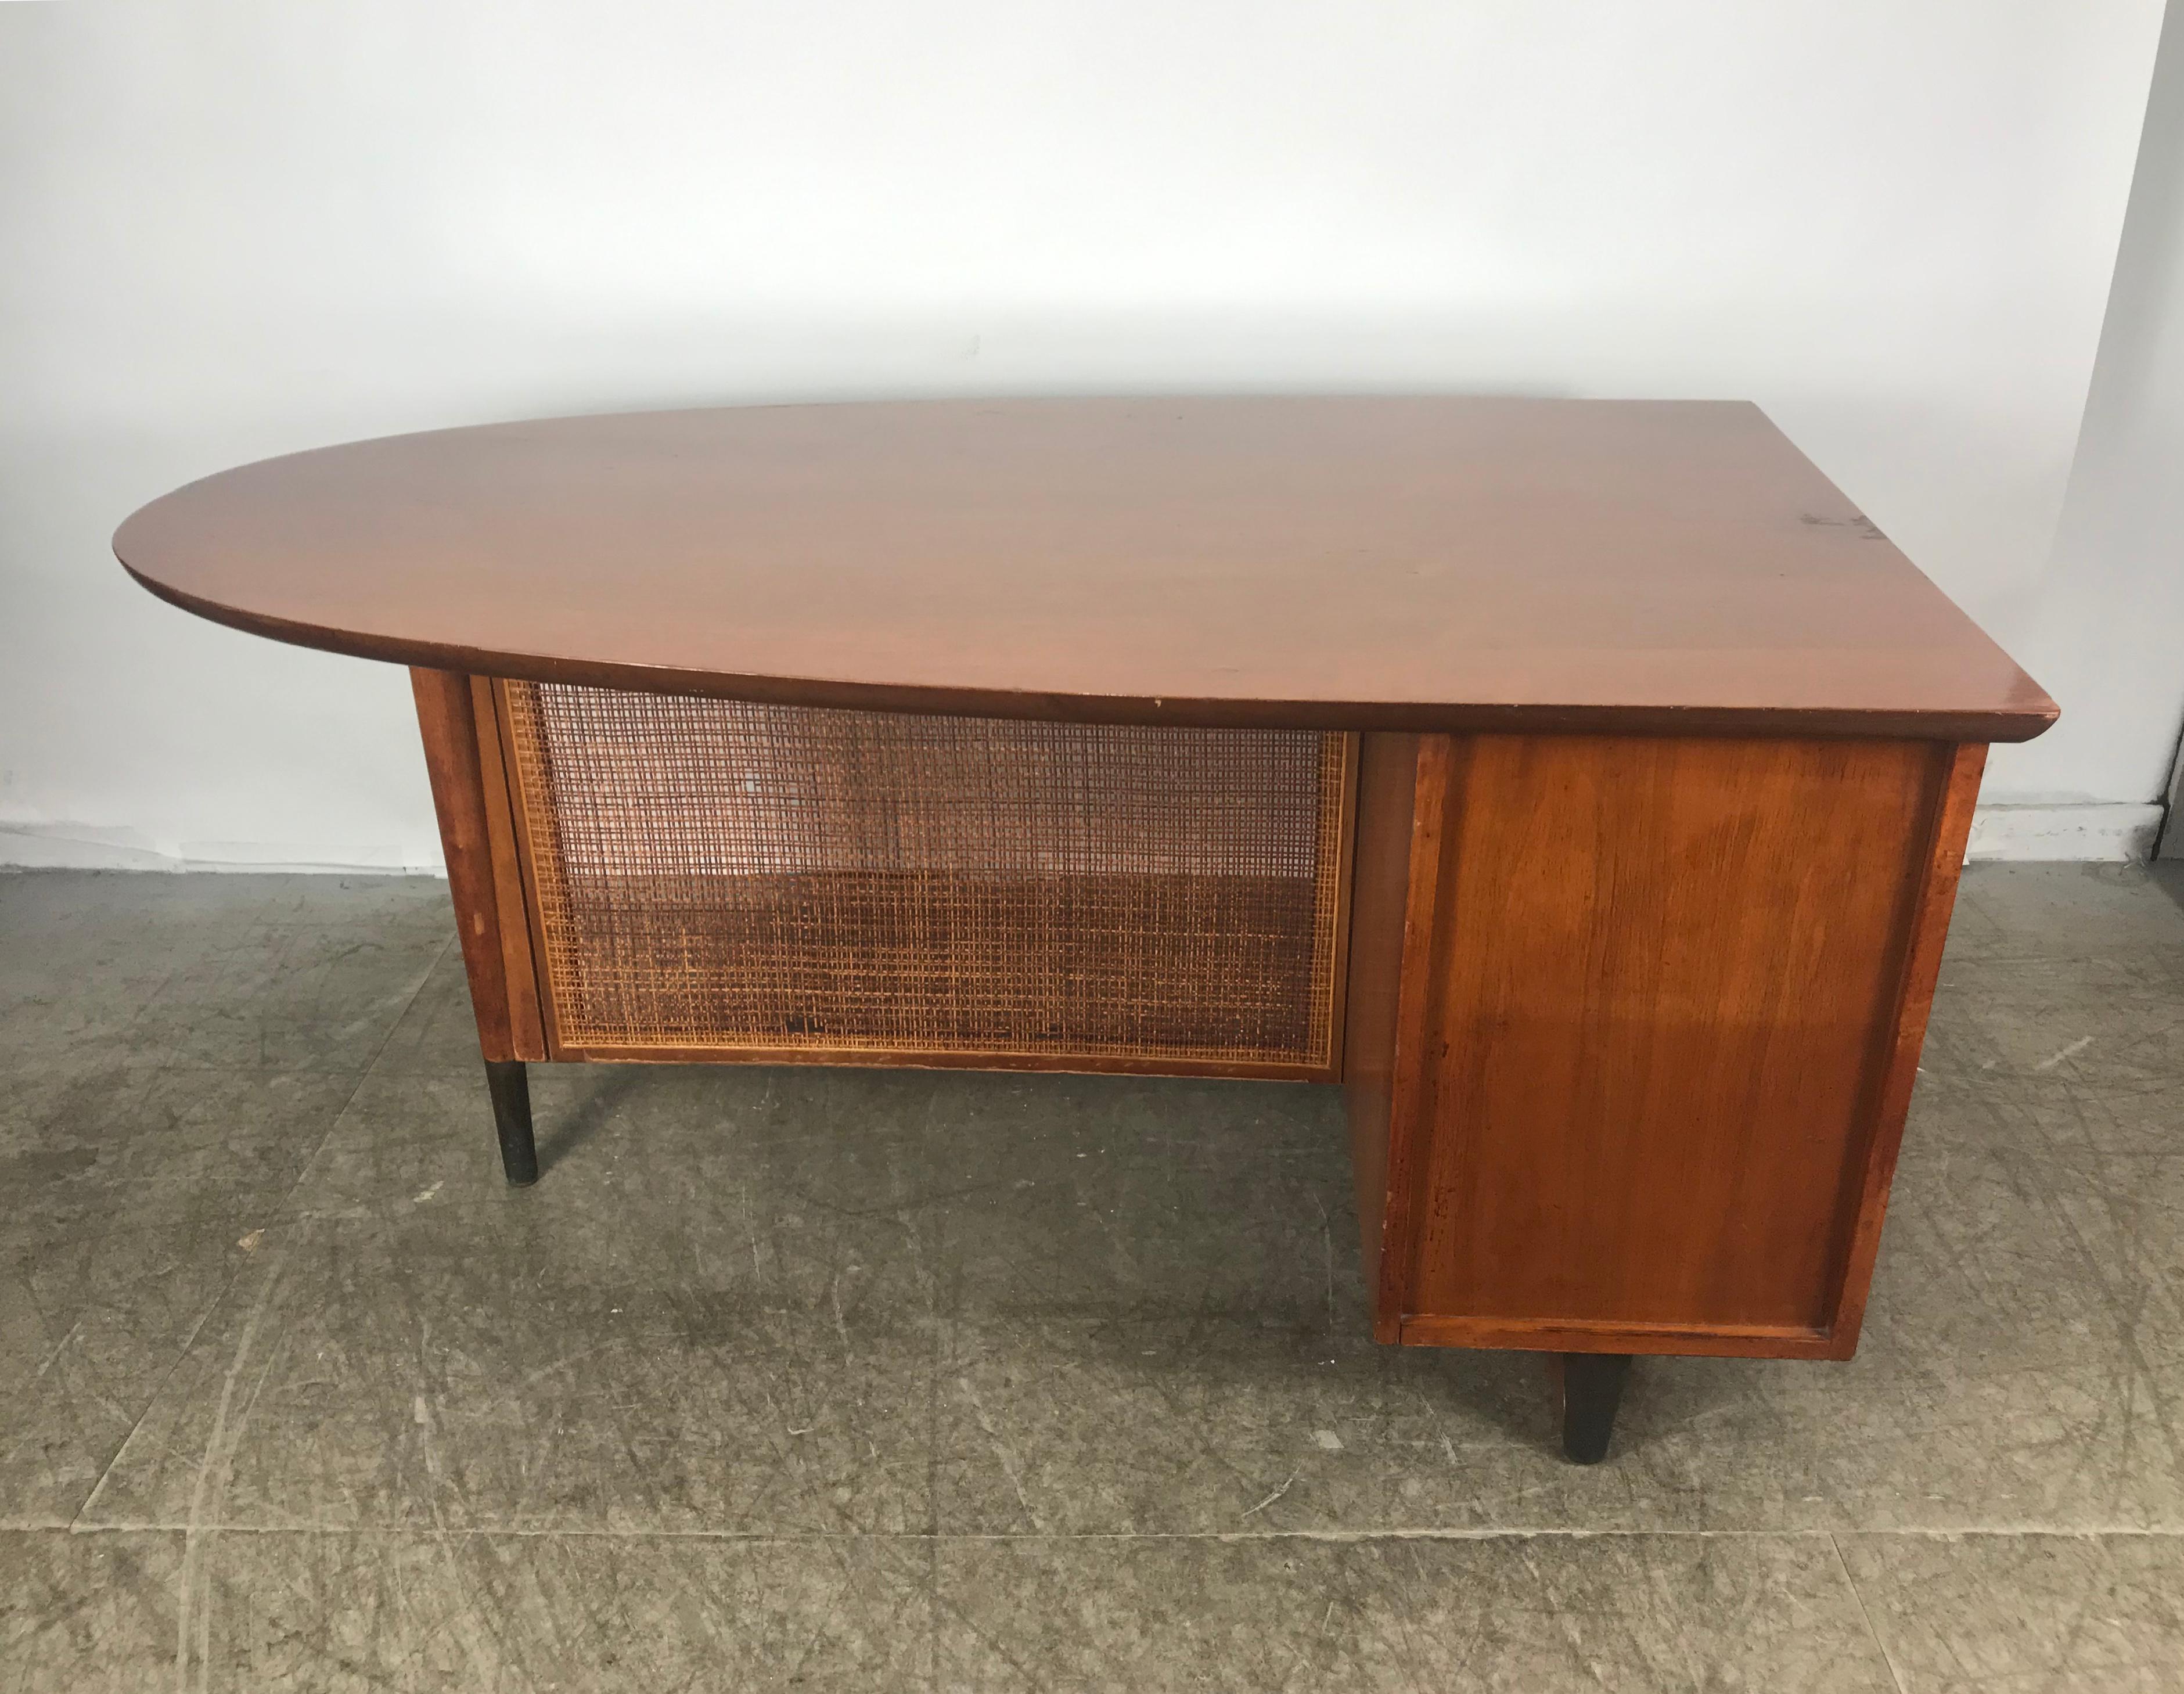 20th Century Unusual Half Oval Shaped Walnut Partners Desk by Miller Desk & Safe Co